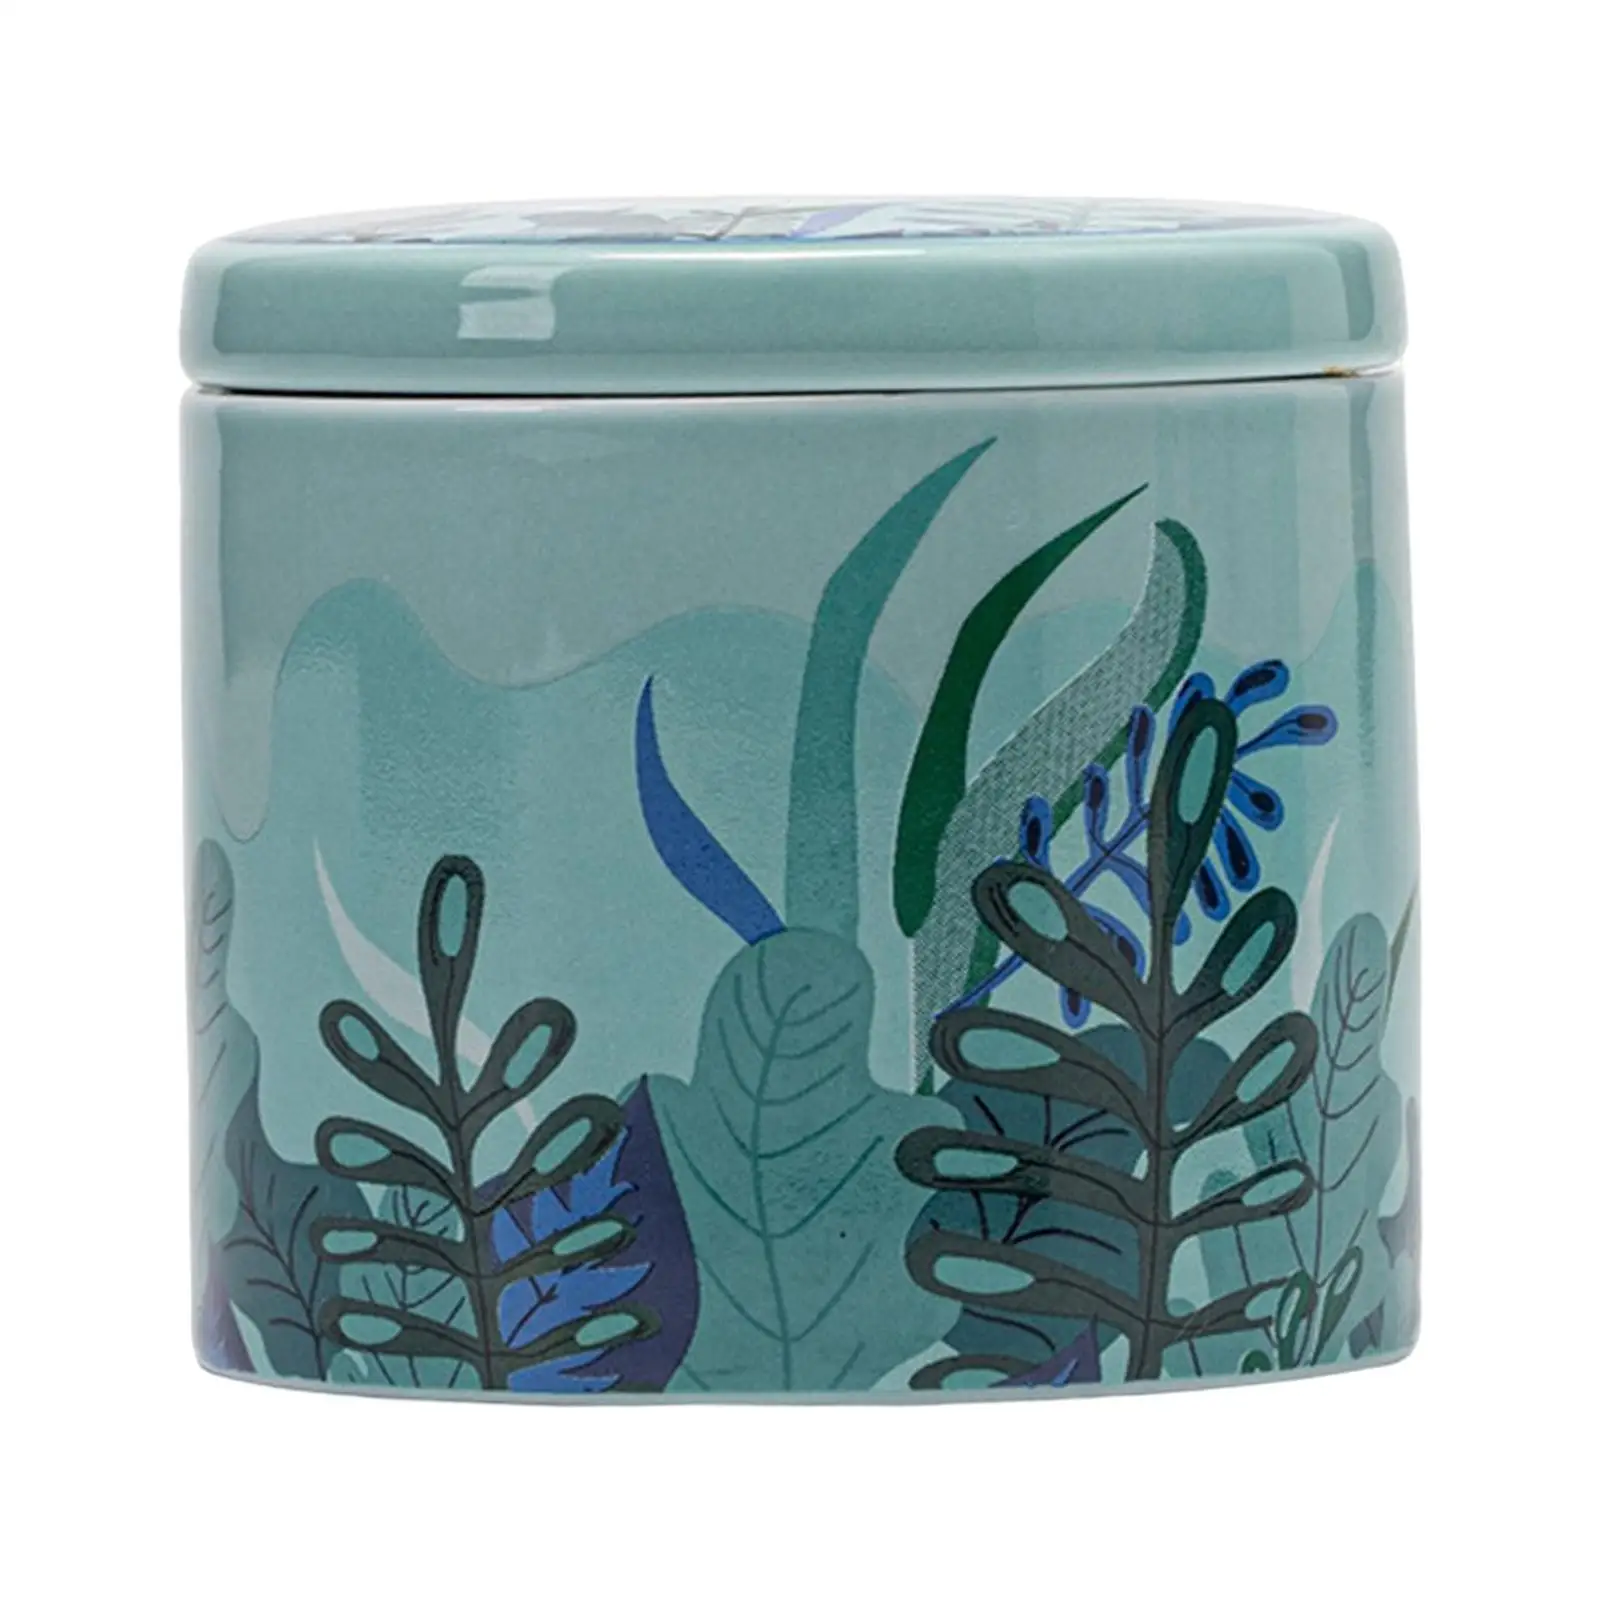 Ceramic Tea jar Storage Container Tea tin durable kitchen Spice Storage Ceramic Food Storage Jar for Serving Tea Leaves spice